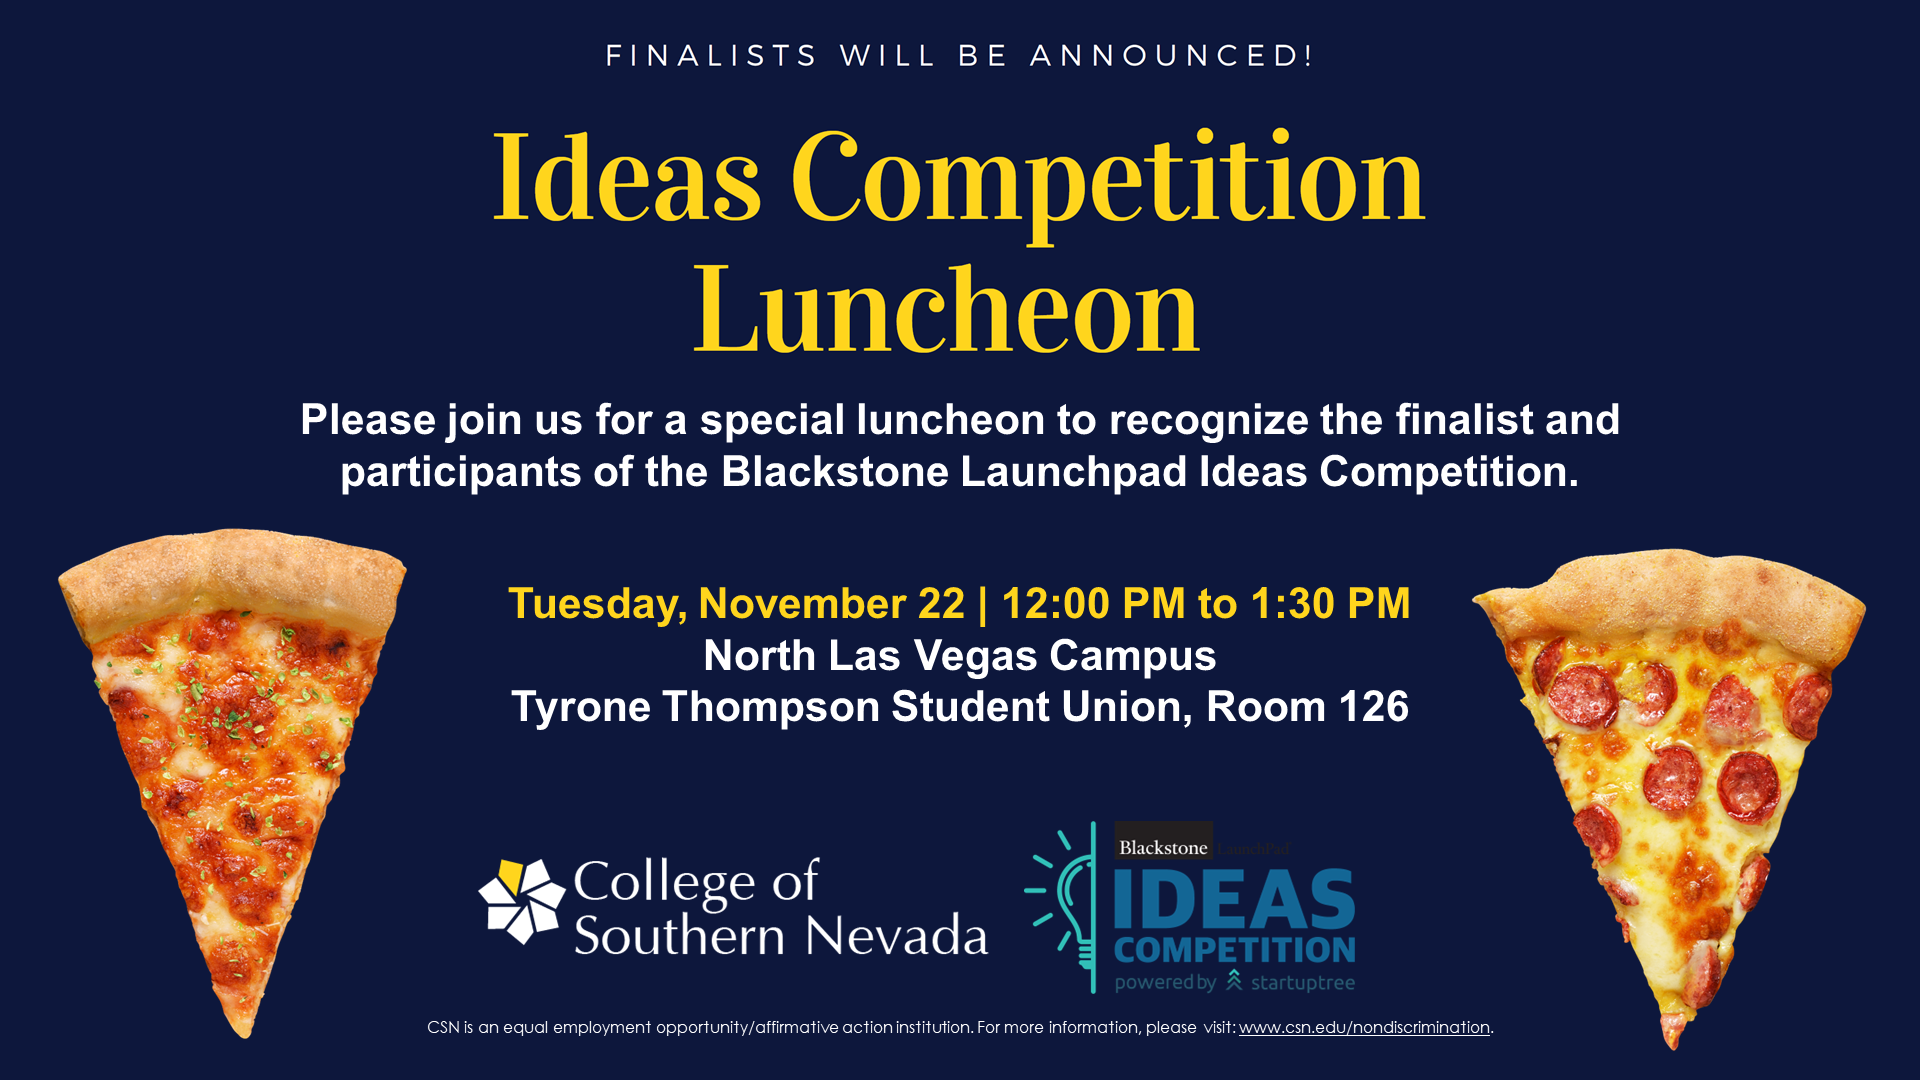 Blackstone Ideas Competition Luncheon